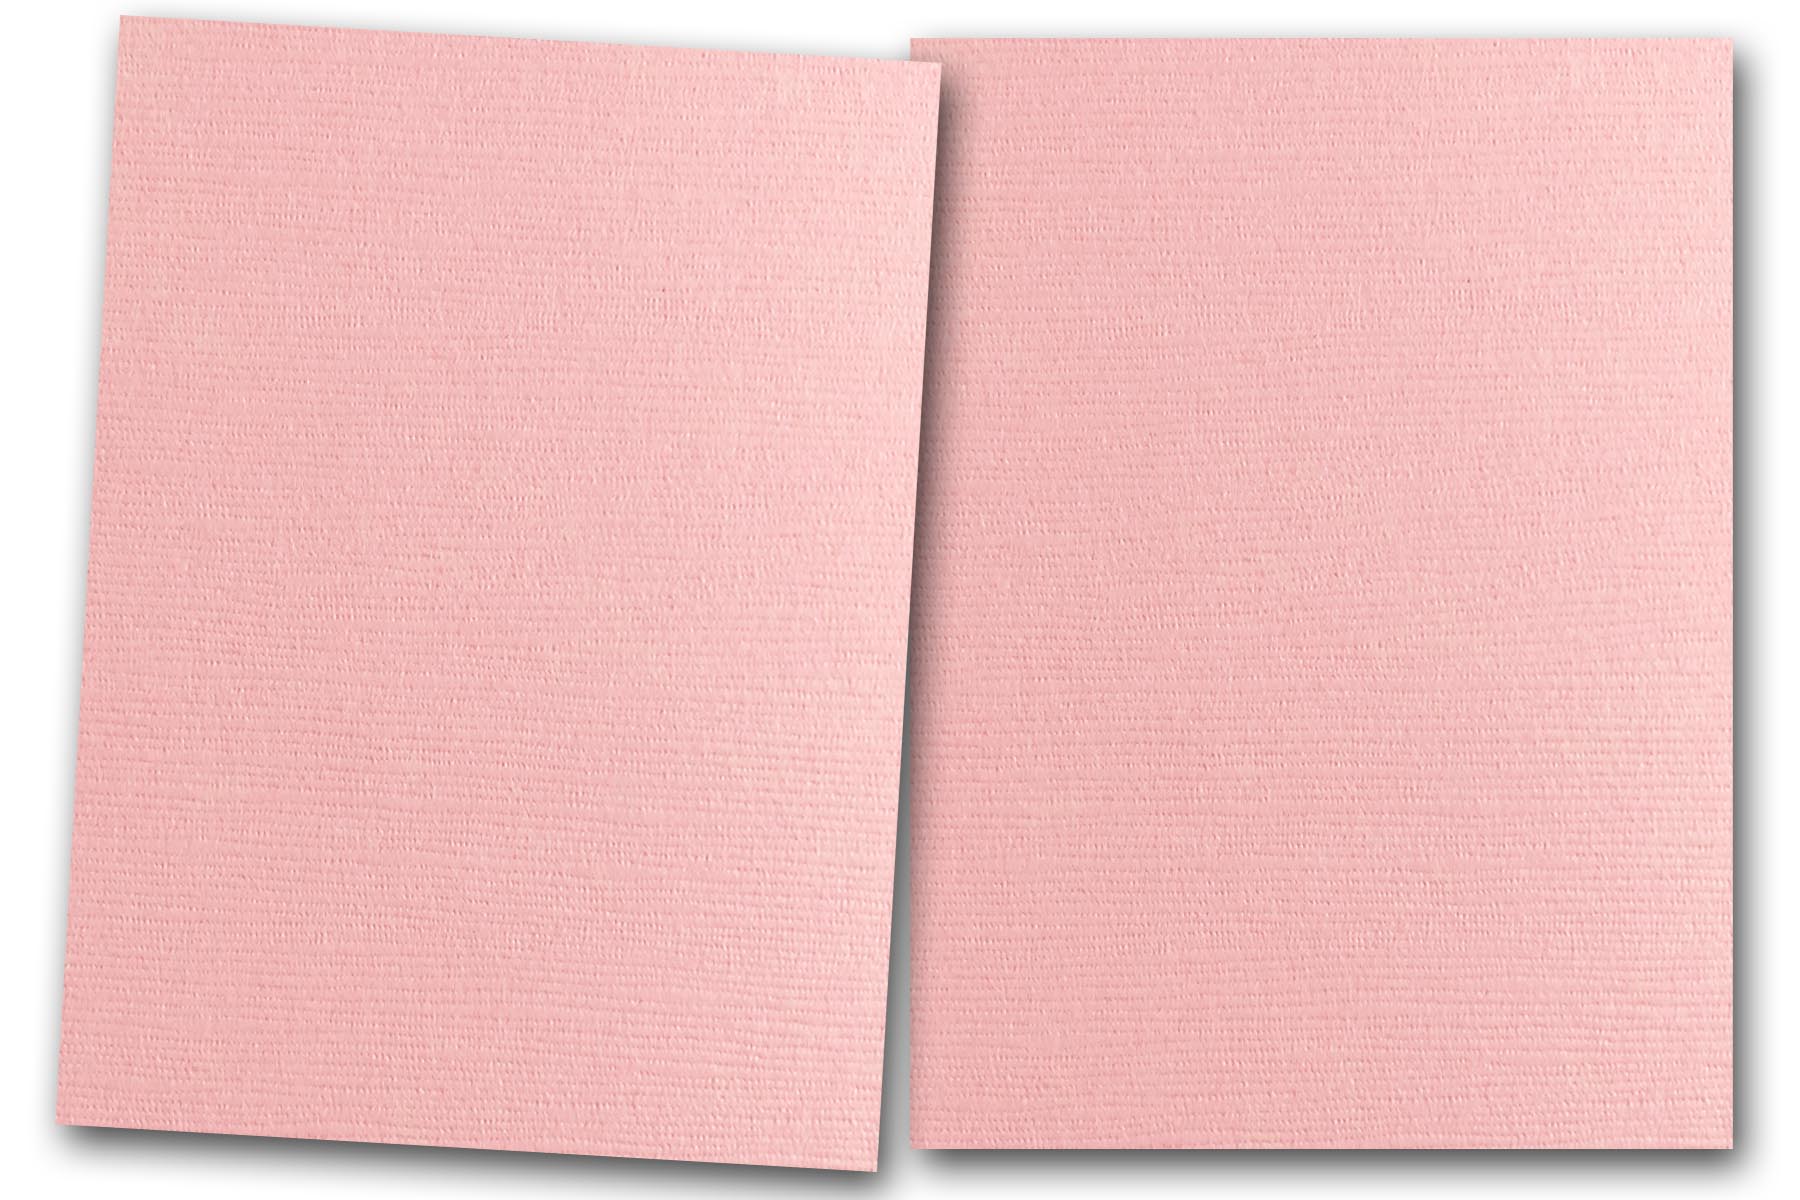 DCS Discount Card Stock: Textured Pink Carnation Card Stock